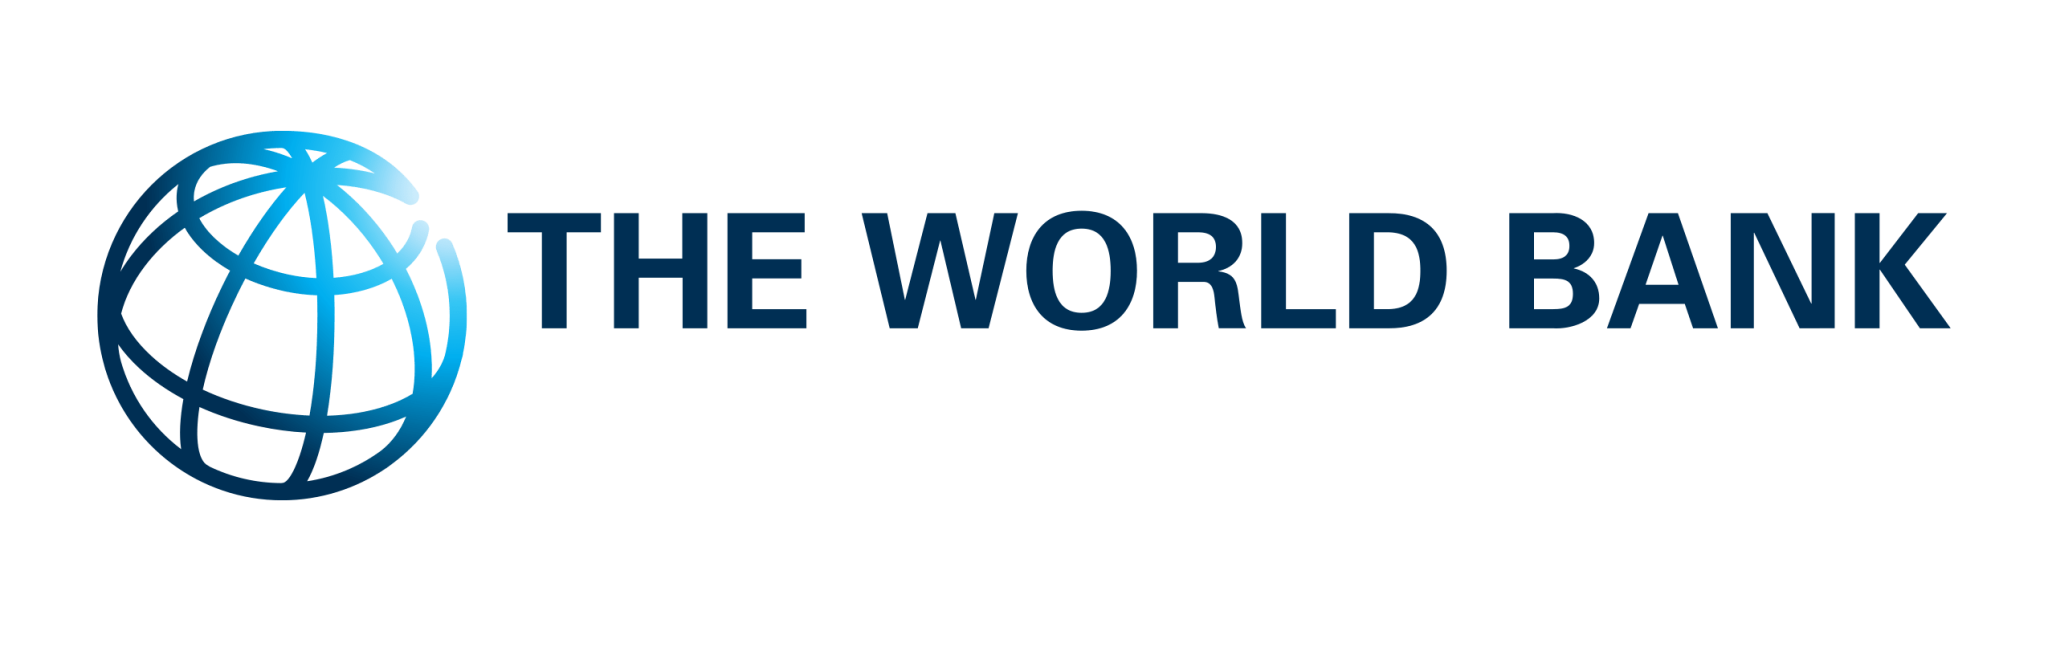 Всемирный банк. Логотип Международный банк. Всемирные банки. Всемирный банк (мировой банк).